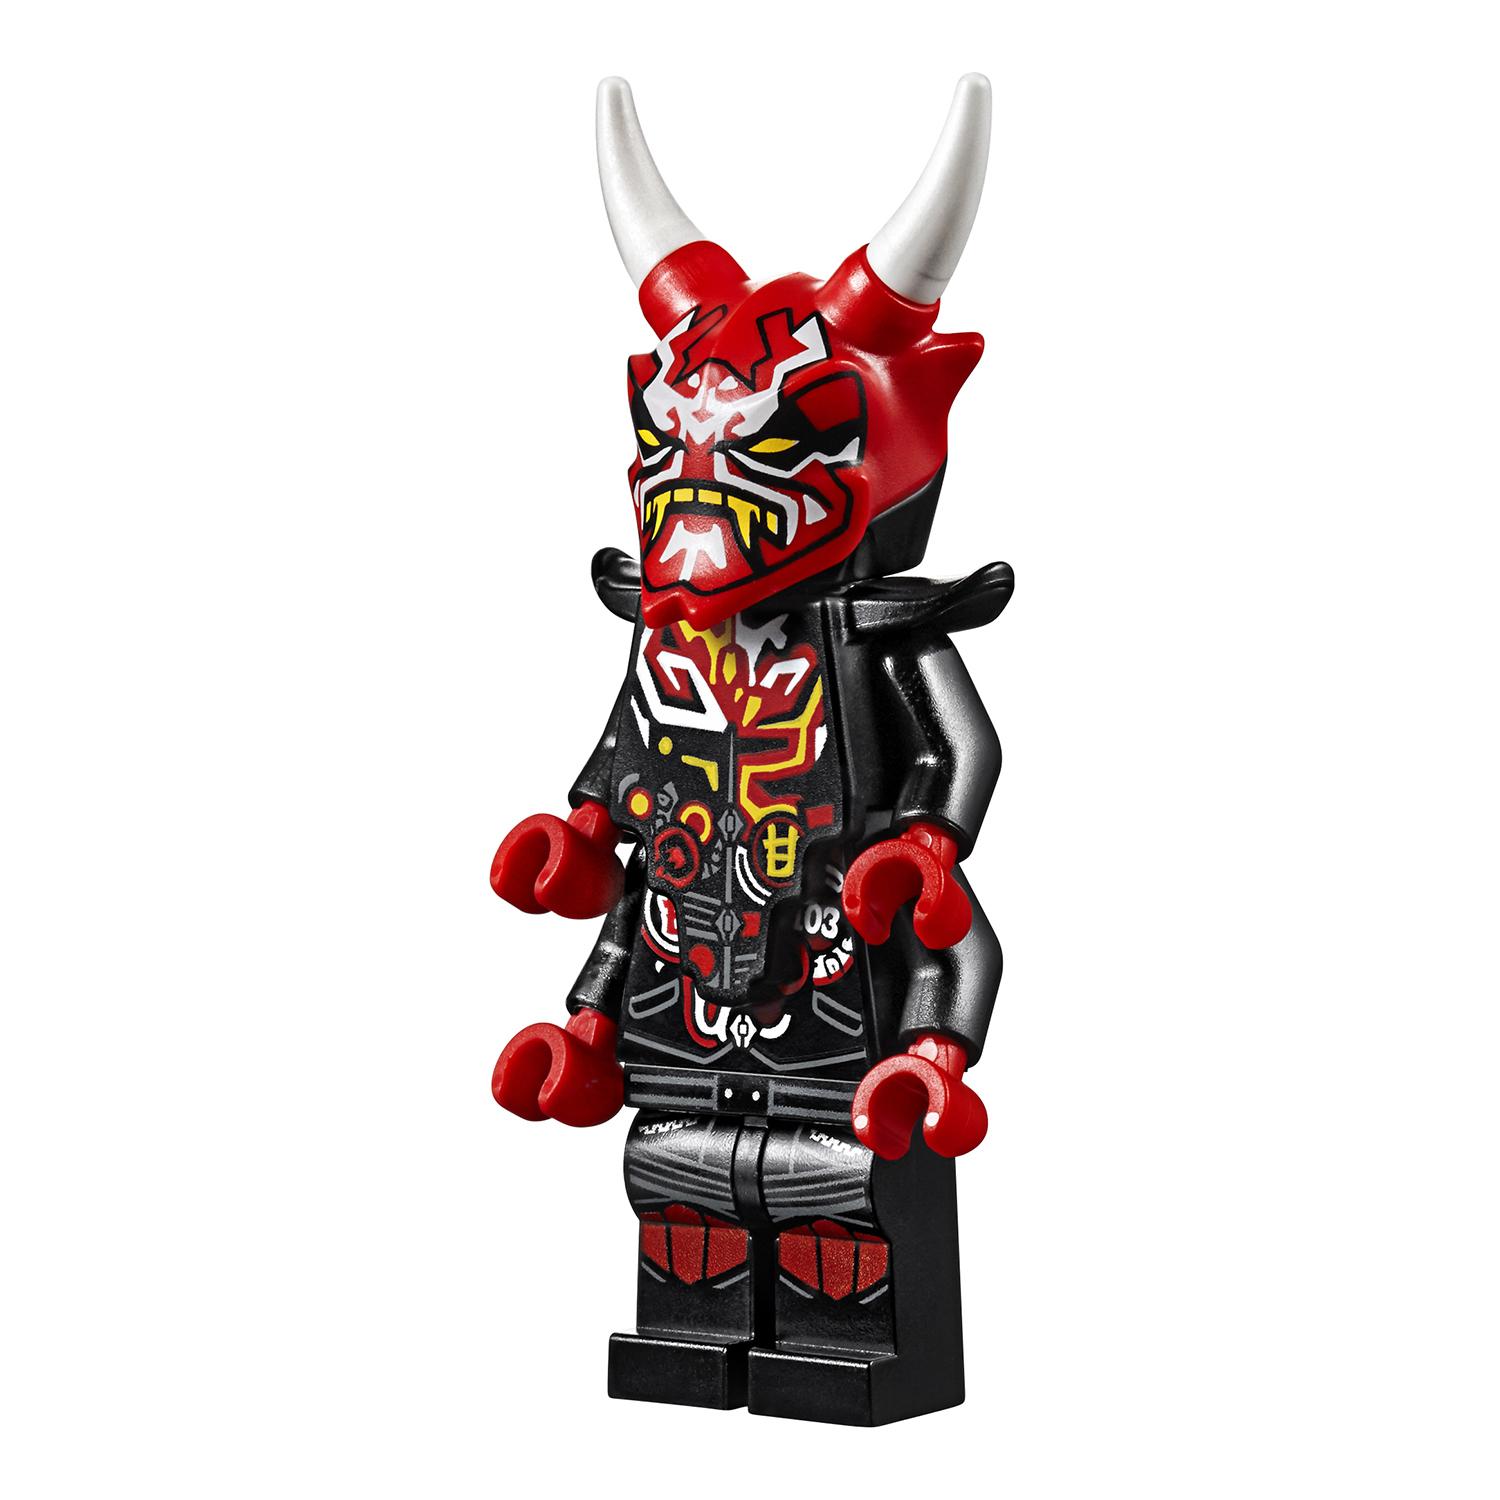 Lego Ninjago 70639 Уличная погоня